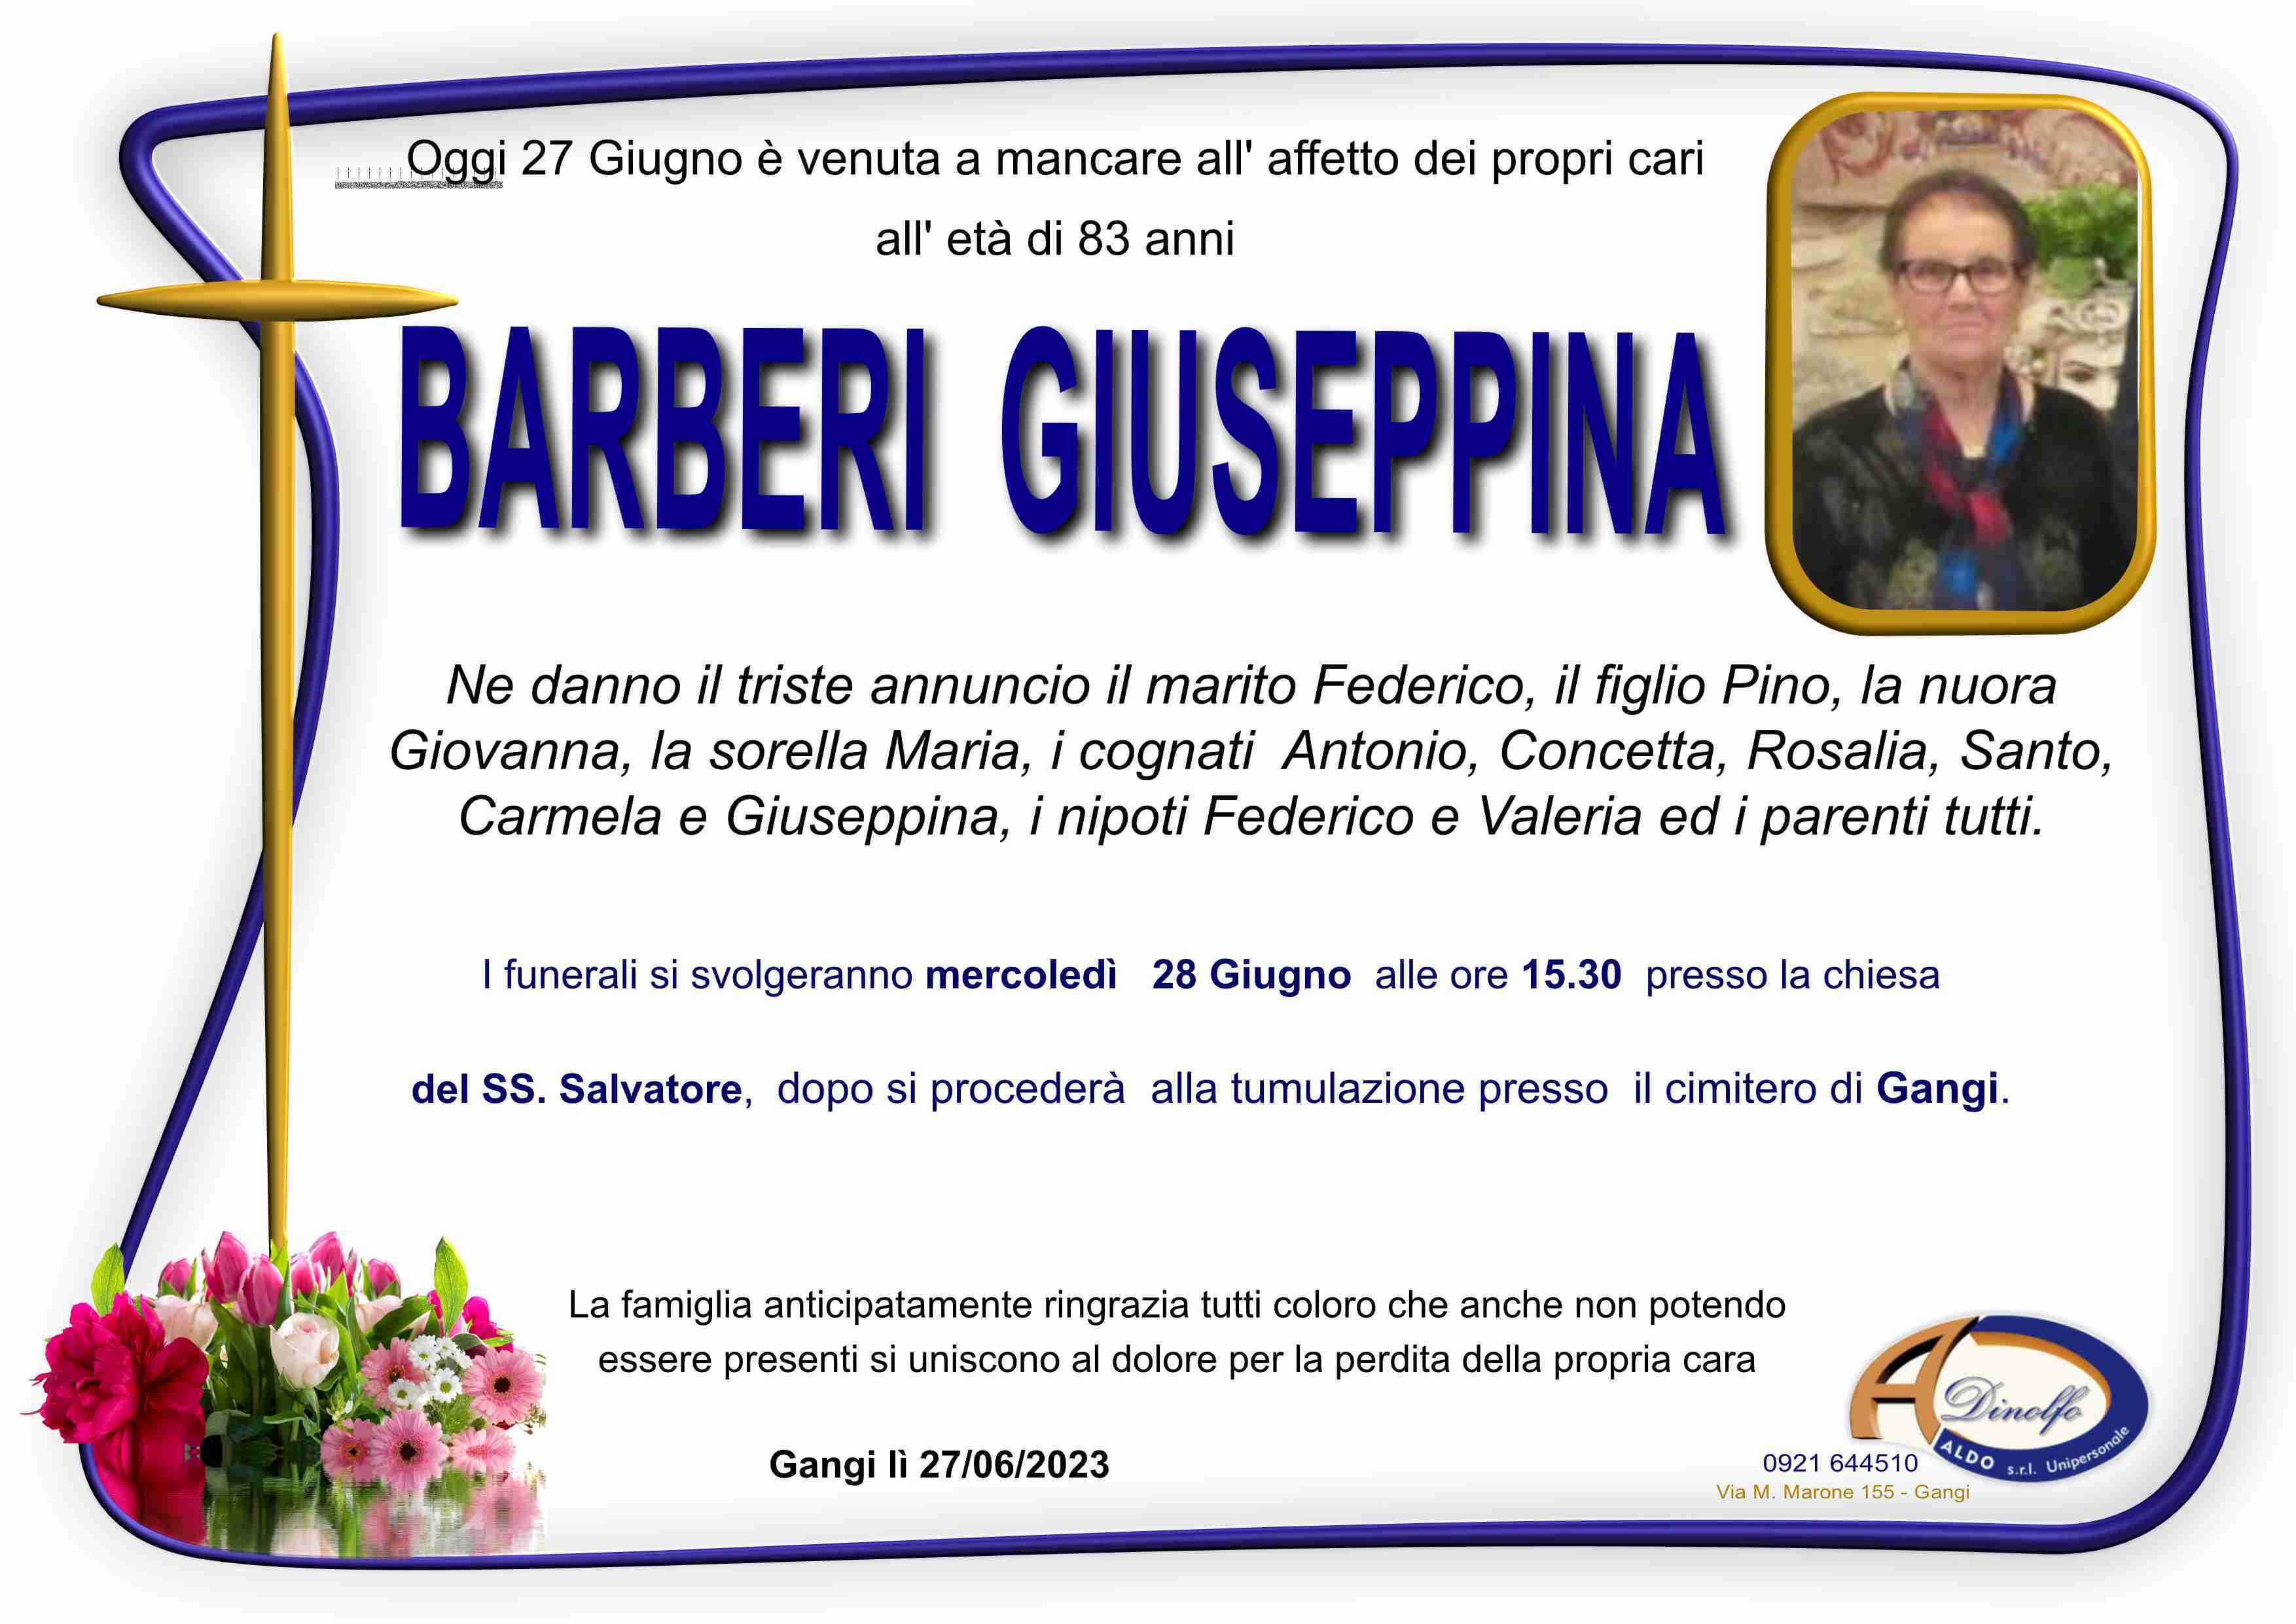 Giuseppina Barberi